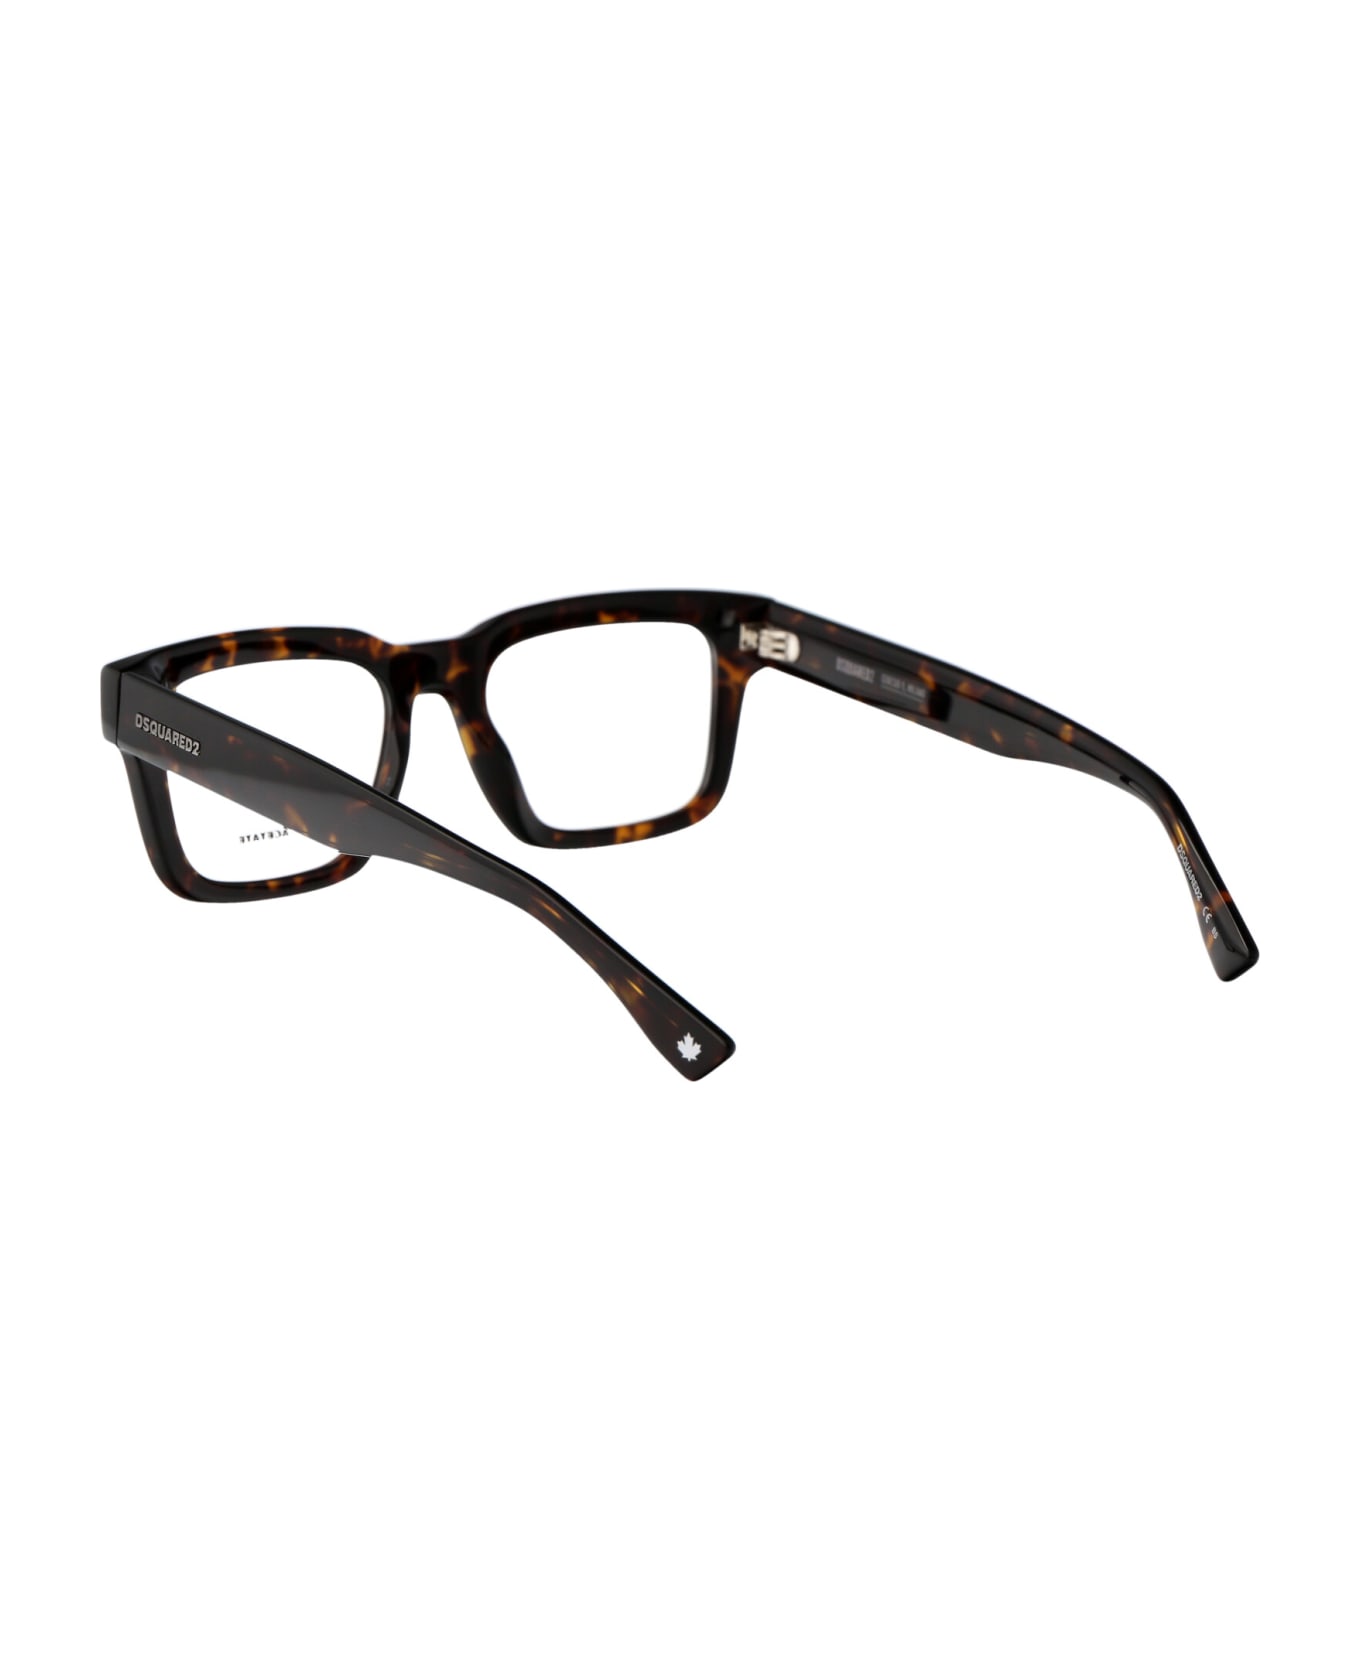 Dsquared2 Eyewear D2 0090 Glasses - 086 HAVANA